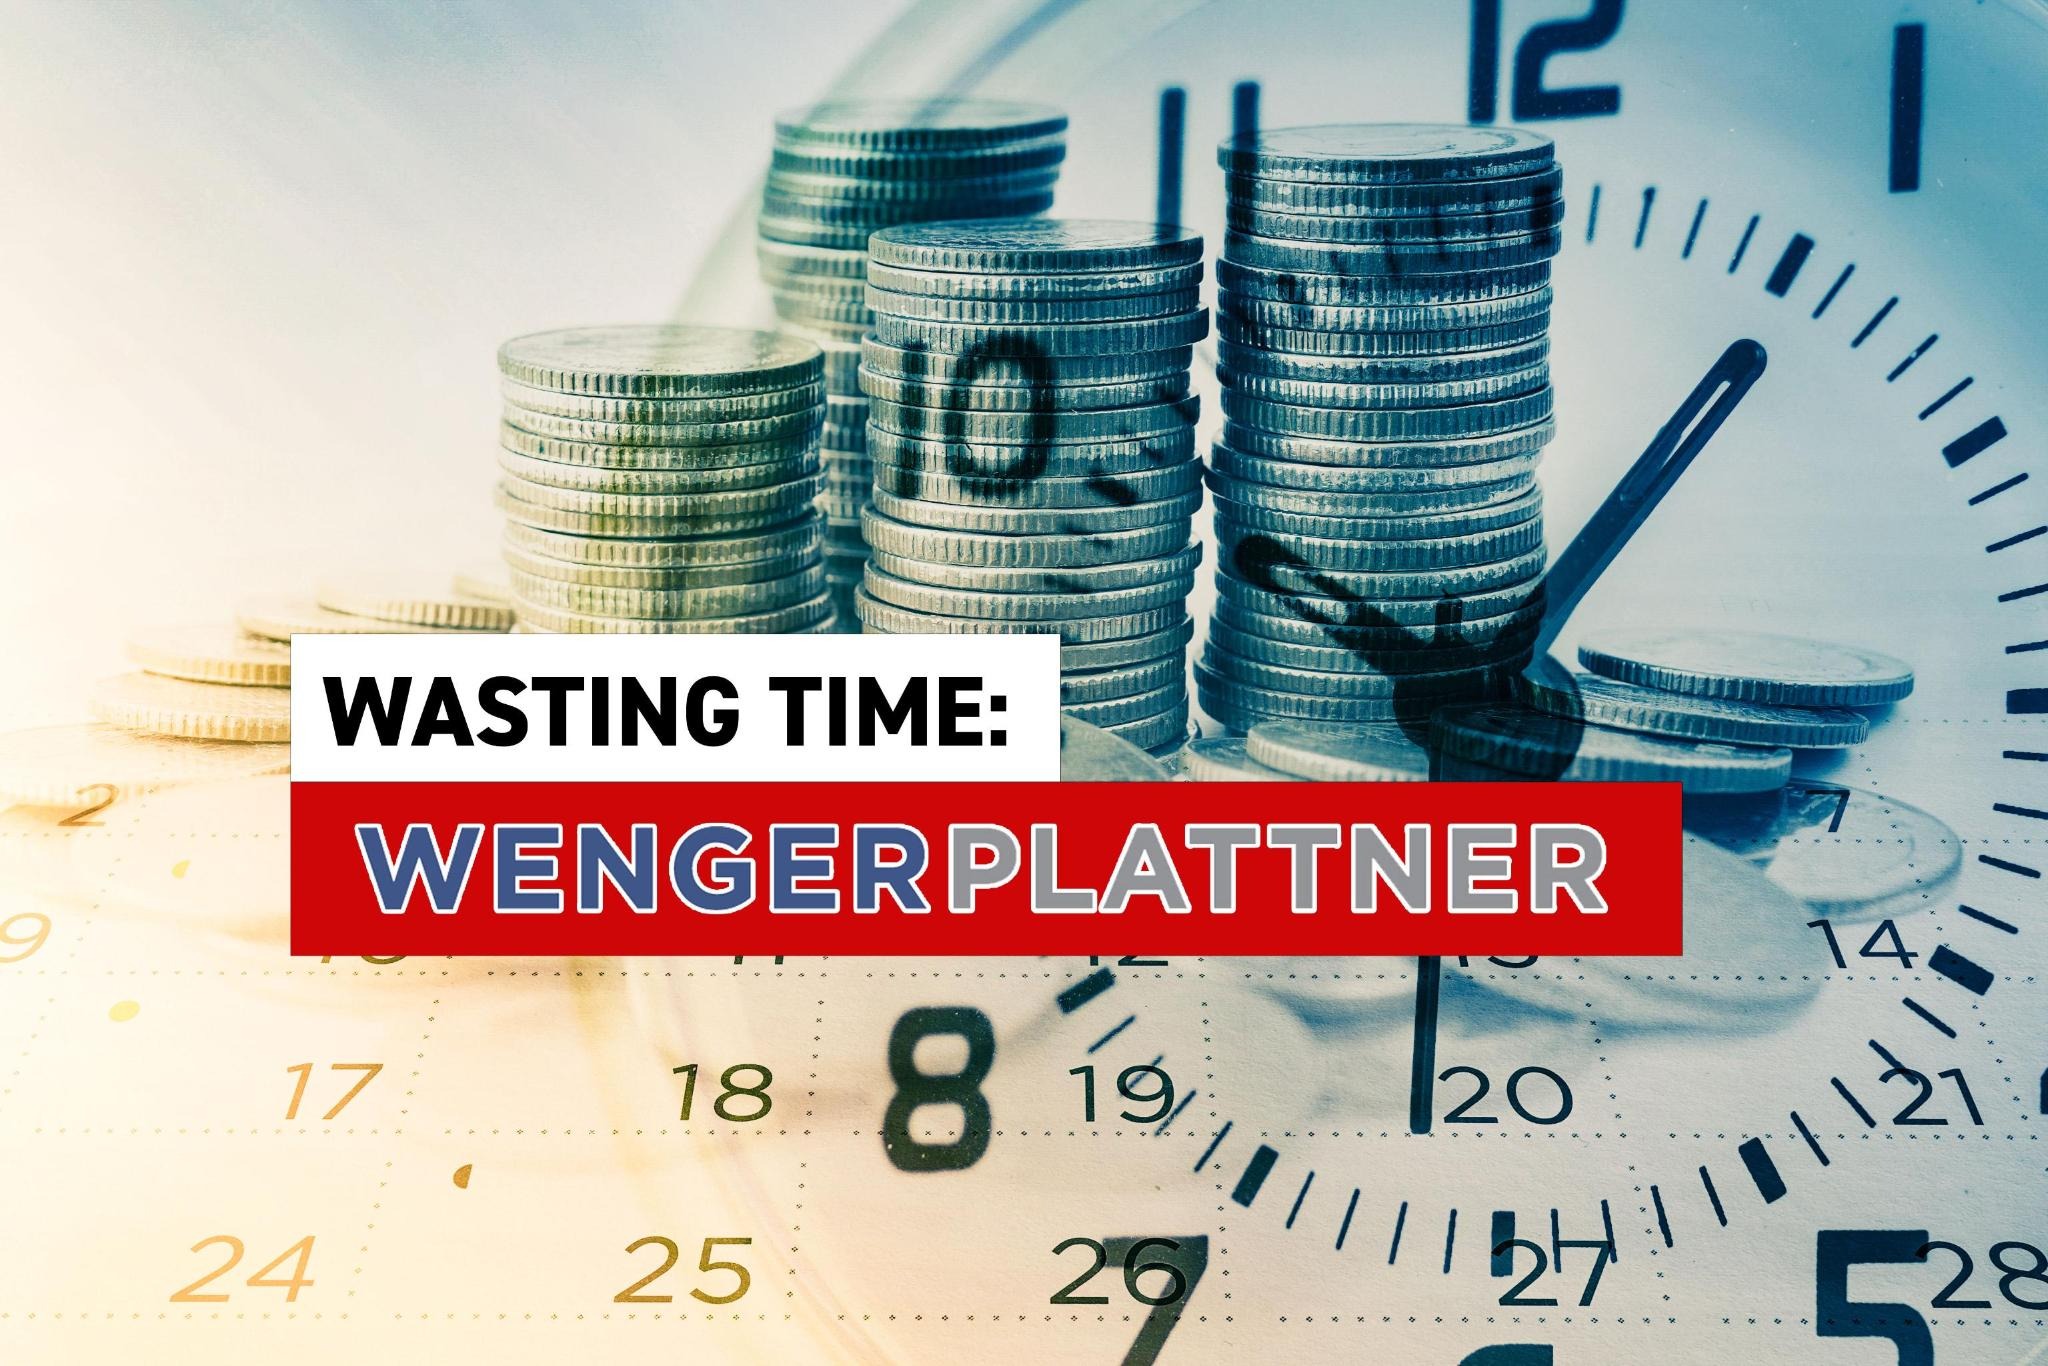 Wenger Plattner Delay Envion Liquidation Collect Millions